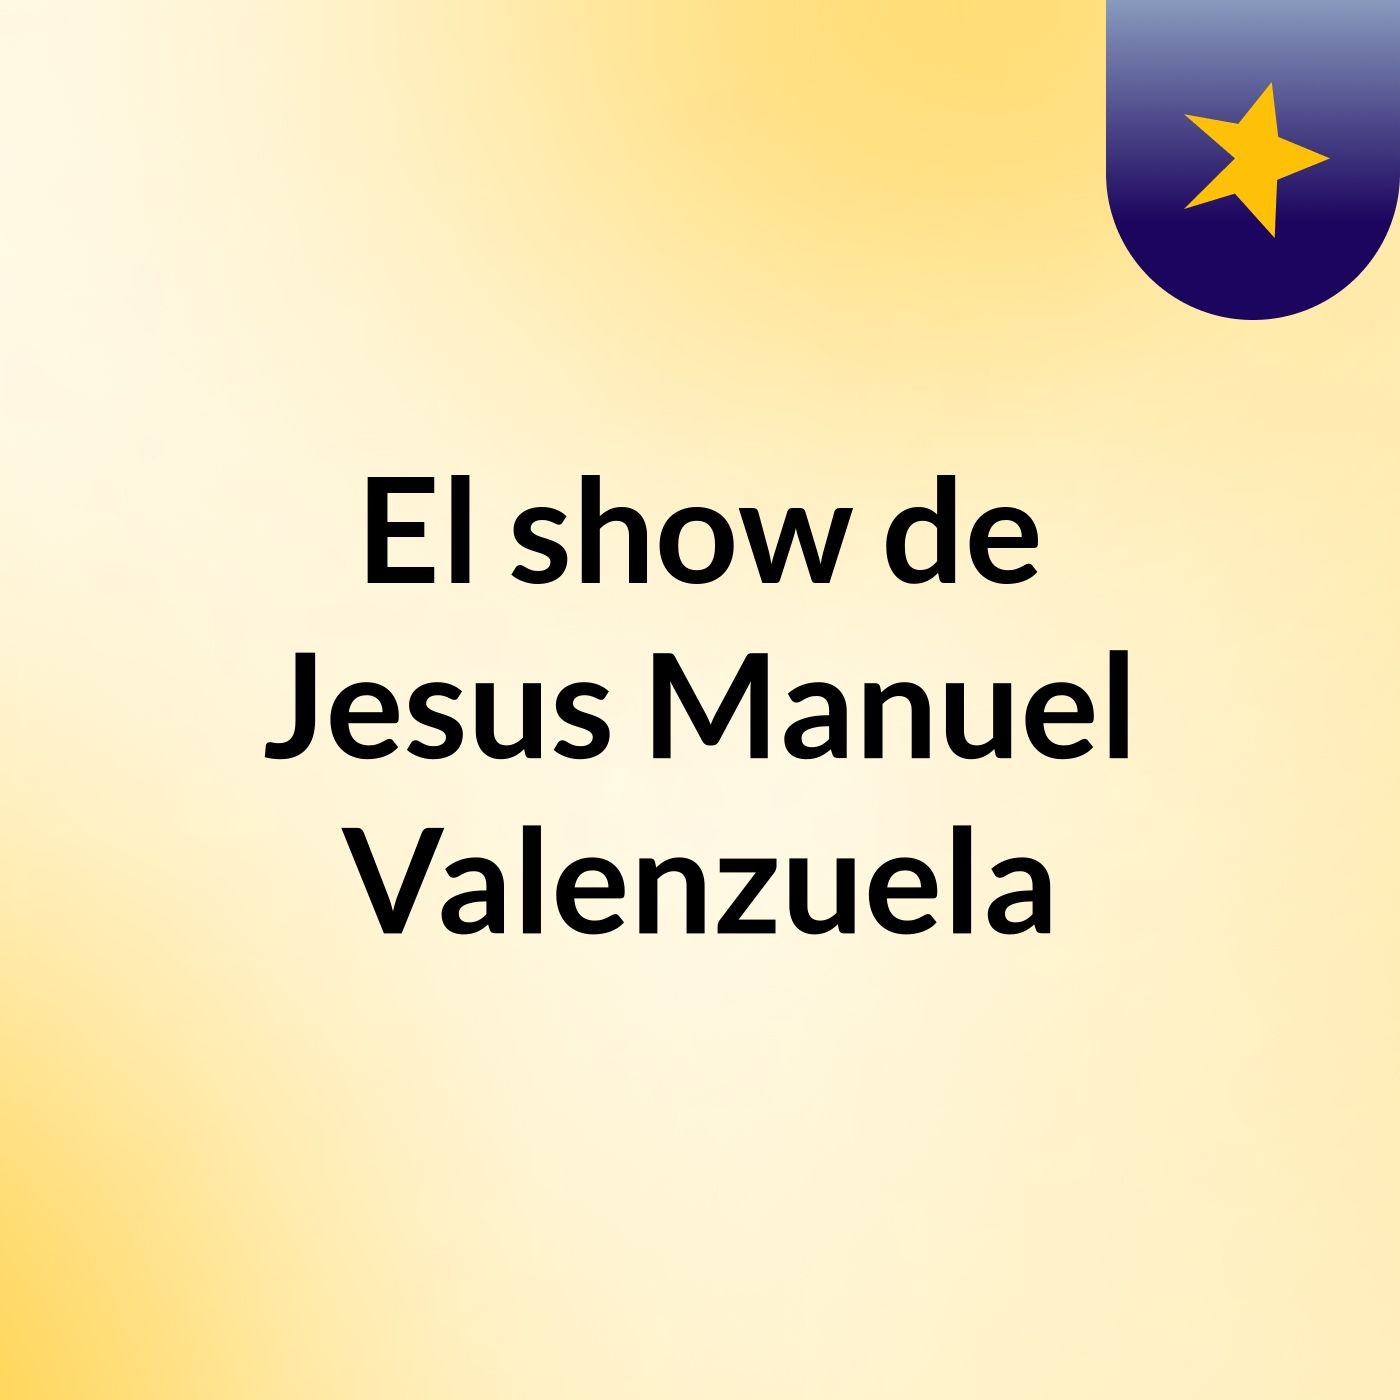 El show de Jesus Manuel Valenzuela